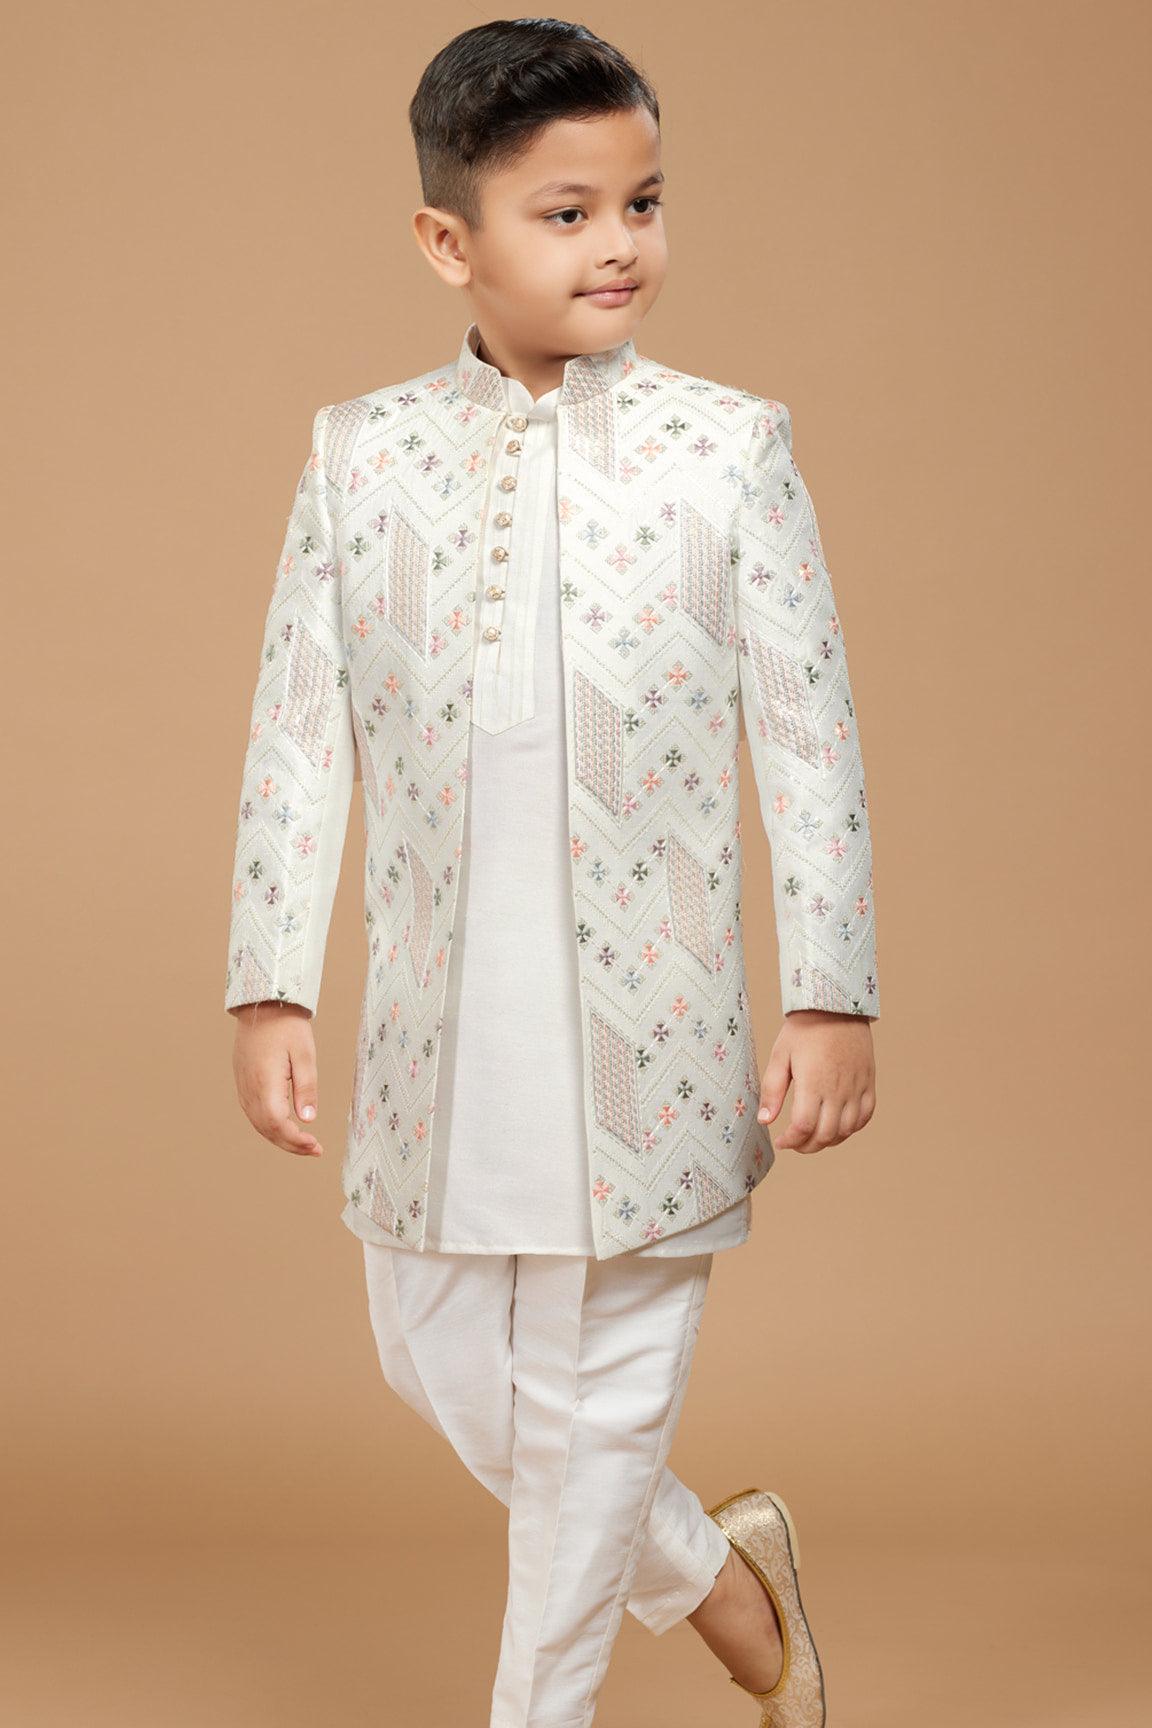 Jodhpuri Suit Khaki Coat Pant Indian Designer Wedding Partywear Sherwani  for Men Coat Pant Jacket Blazer With Ivory Pant - Etsy | Groom dress men,  Wedding dresses men indian, Wedding outfits for groom